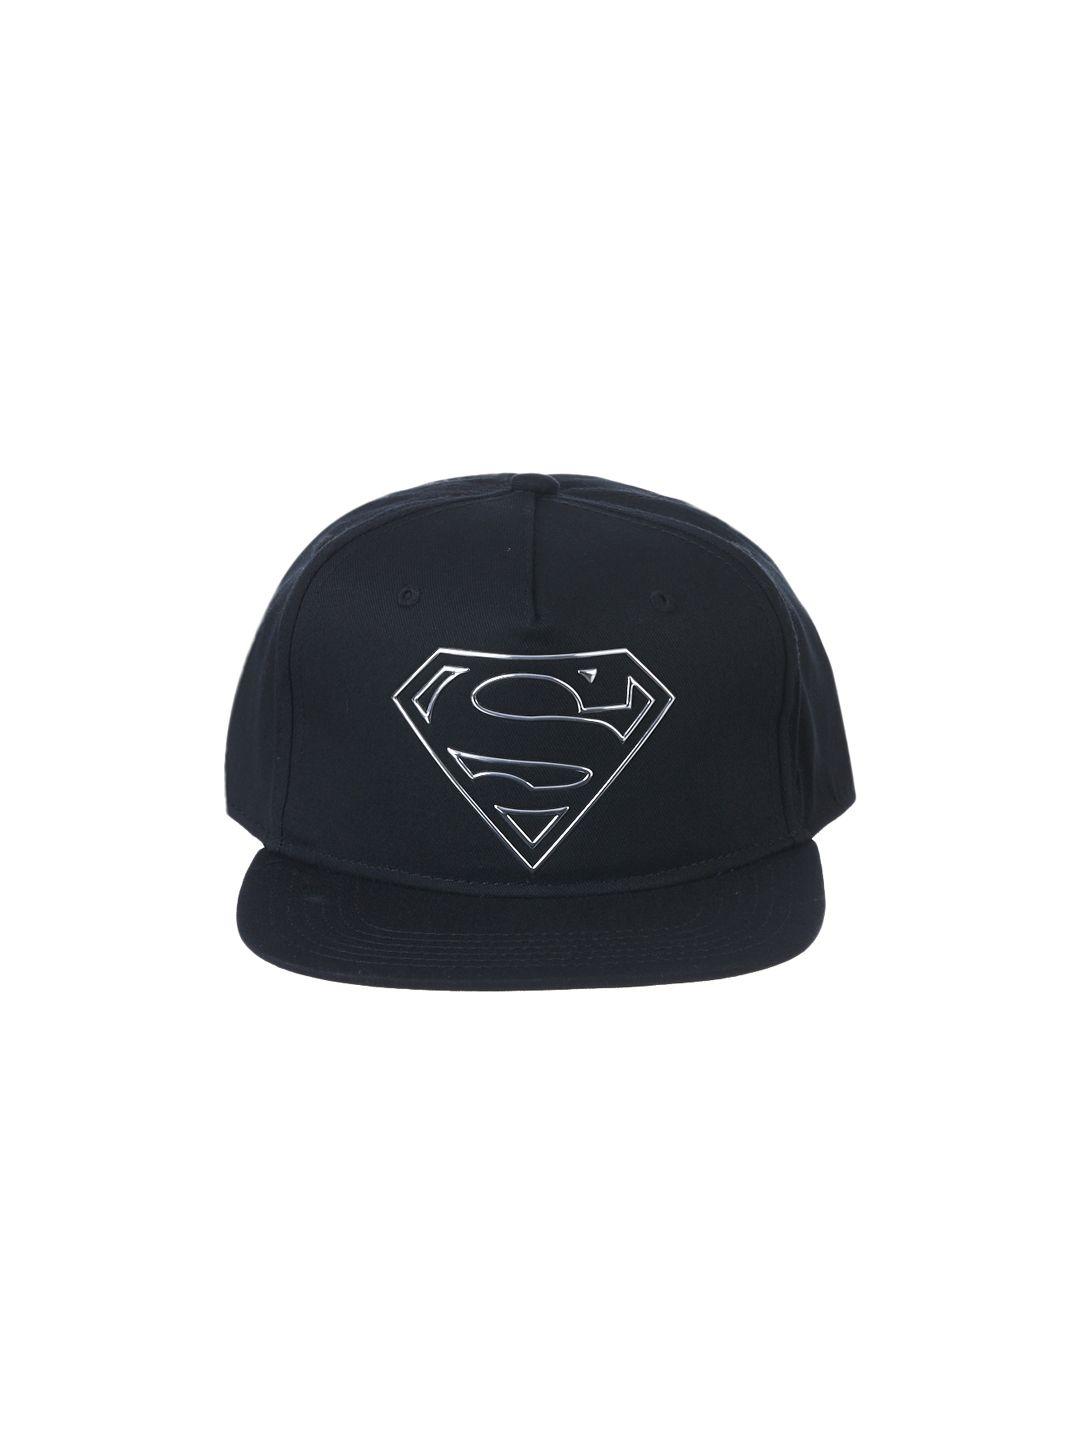 superman by kidsville boys black cap